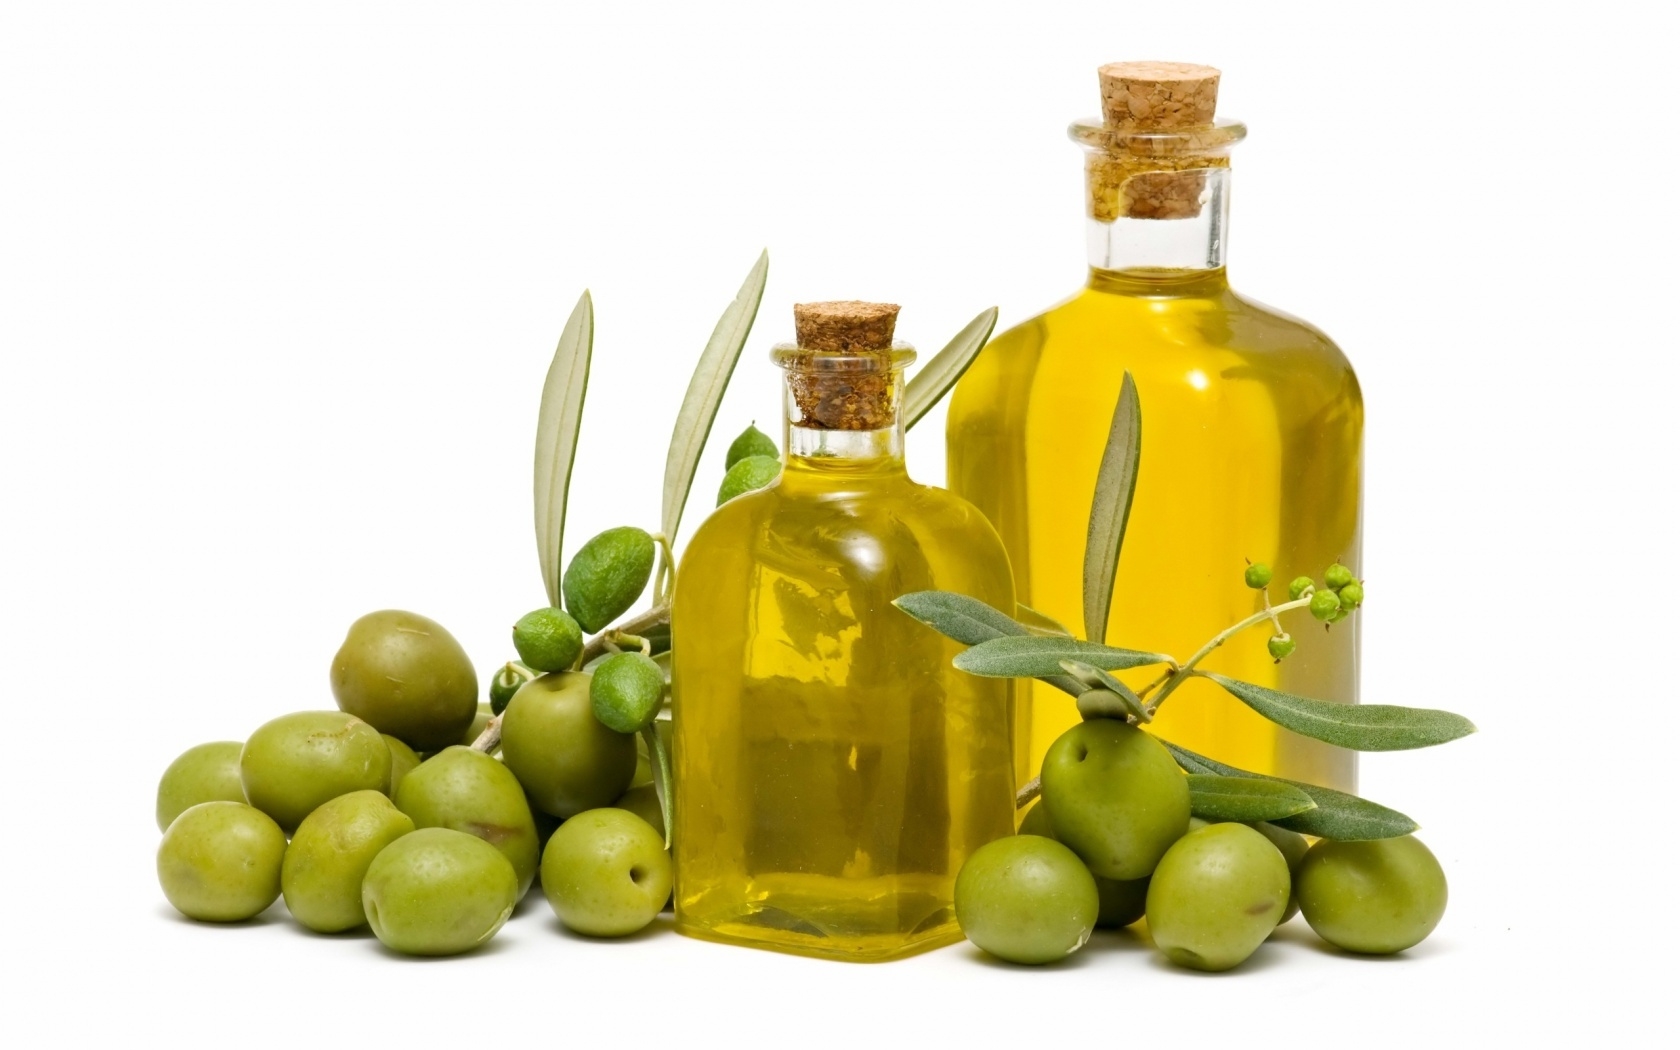 Еще наши бабушки и прабабушки использовали оливковое масло в борьбе со стриями